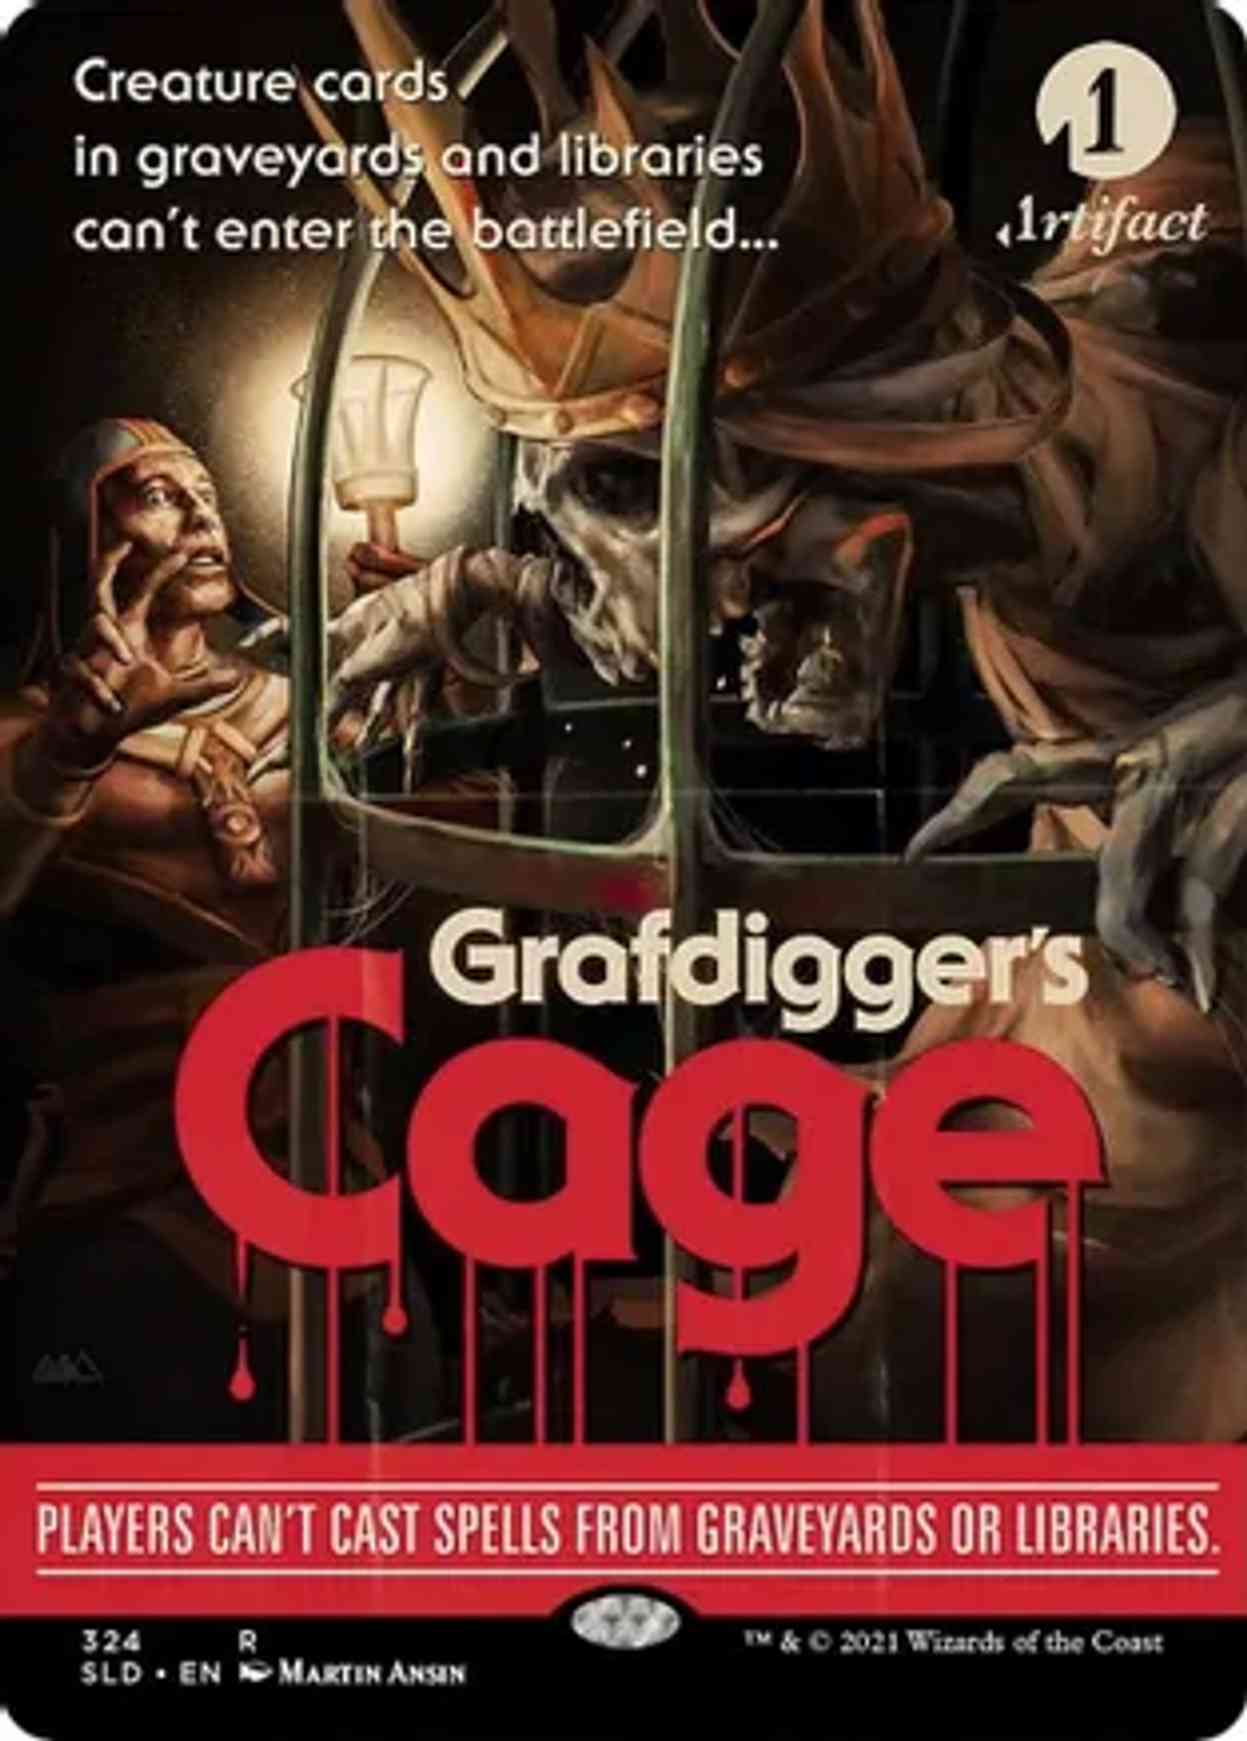 Grafdigger's Cage magic card front